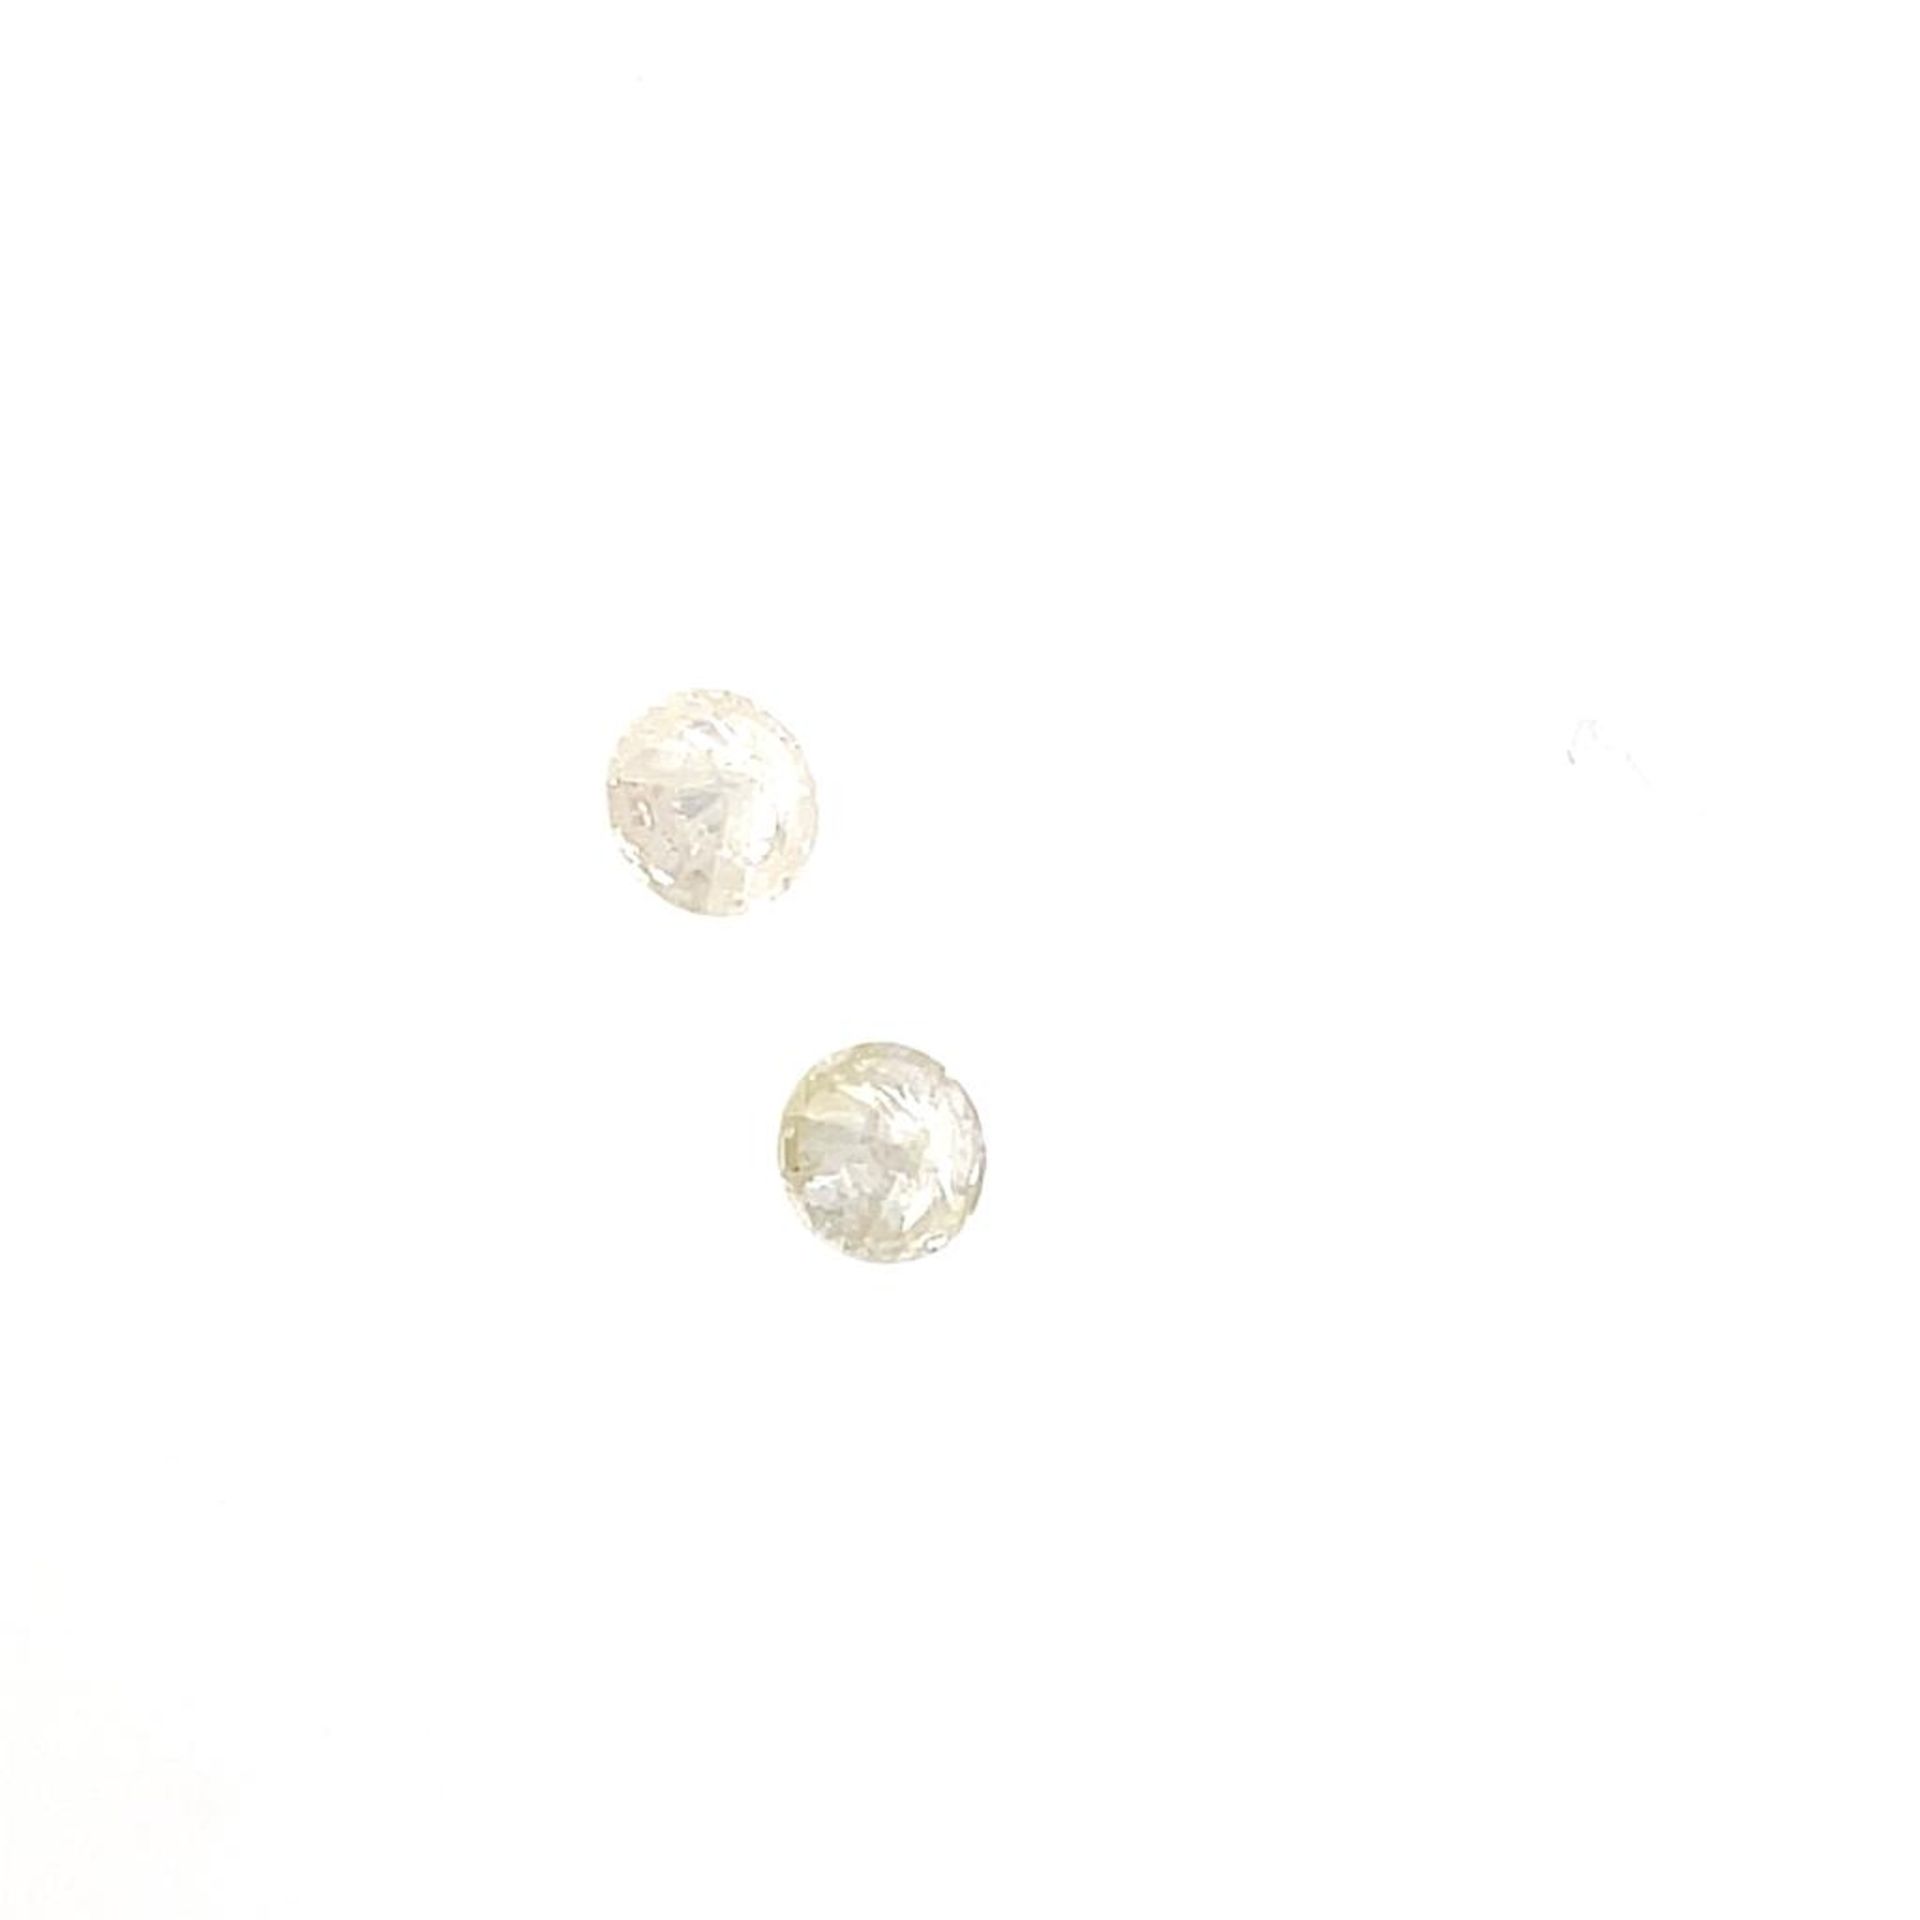 2 DIAMONDS 0.45 CT TOTAL J -K - I2 - BRILLIANT CUT - CERTIFICATE NOT PRESENT - C20306-11D - Bild 3 aus 3